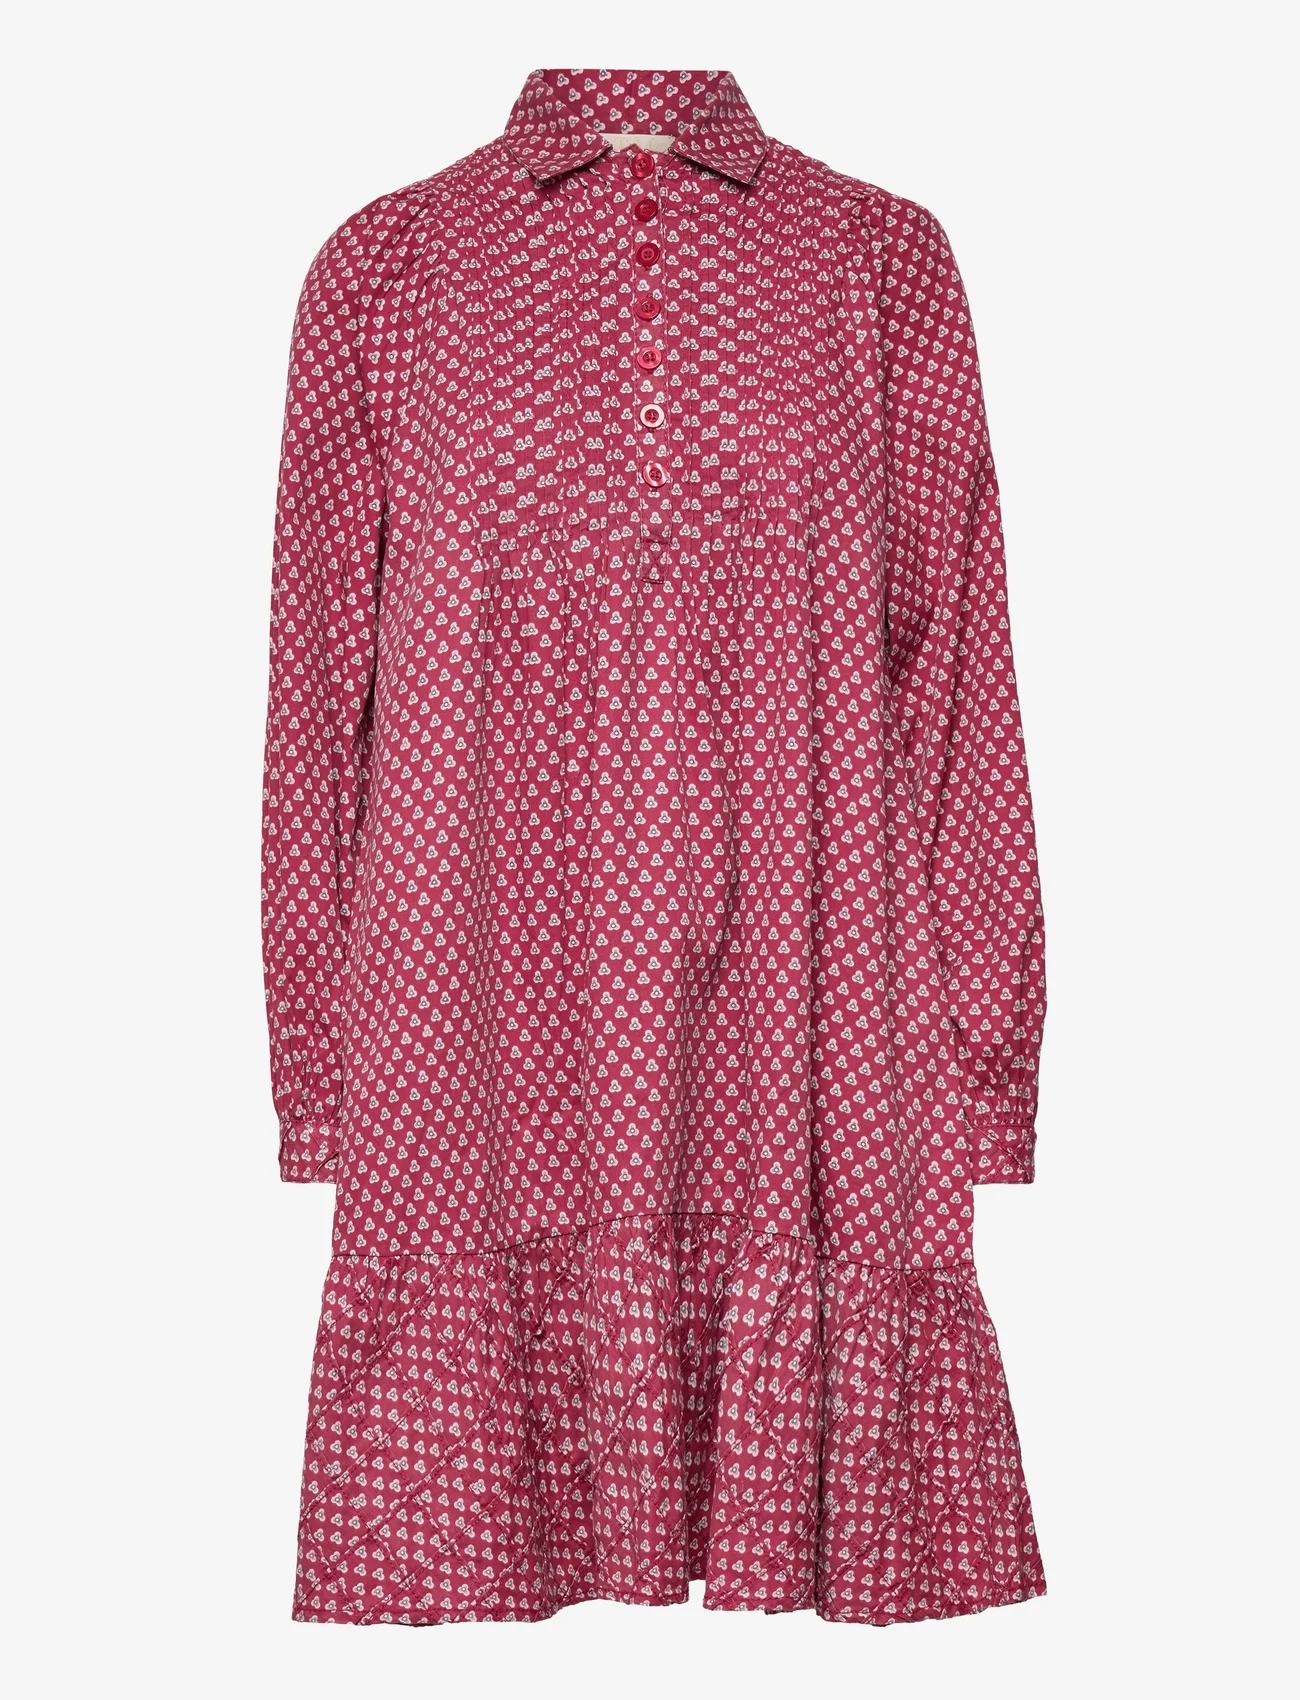 by Ti Mo - Structured Cotton Shift Dress - marškinių tipo suknelės - floral dots - 0